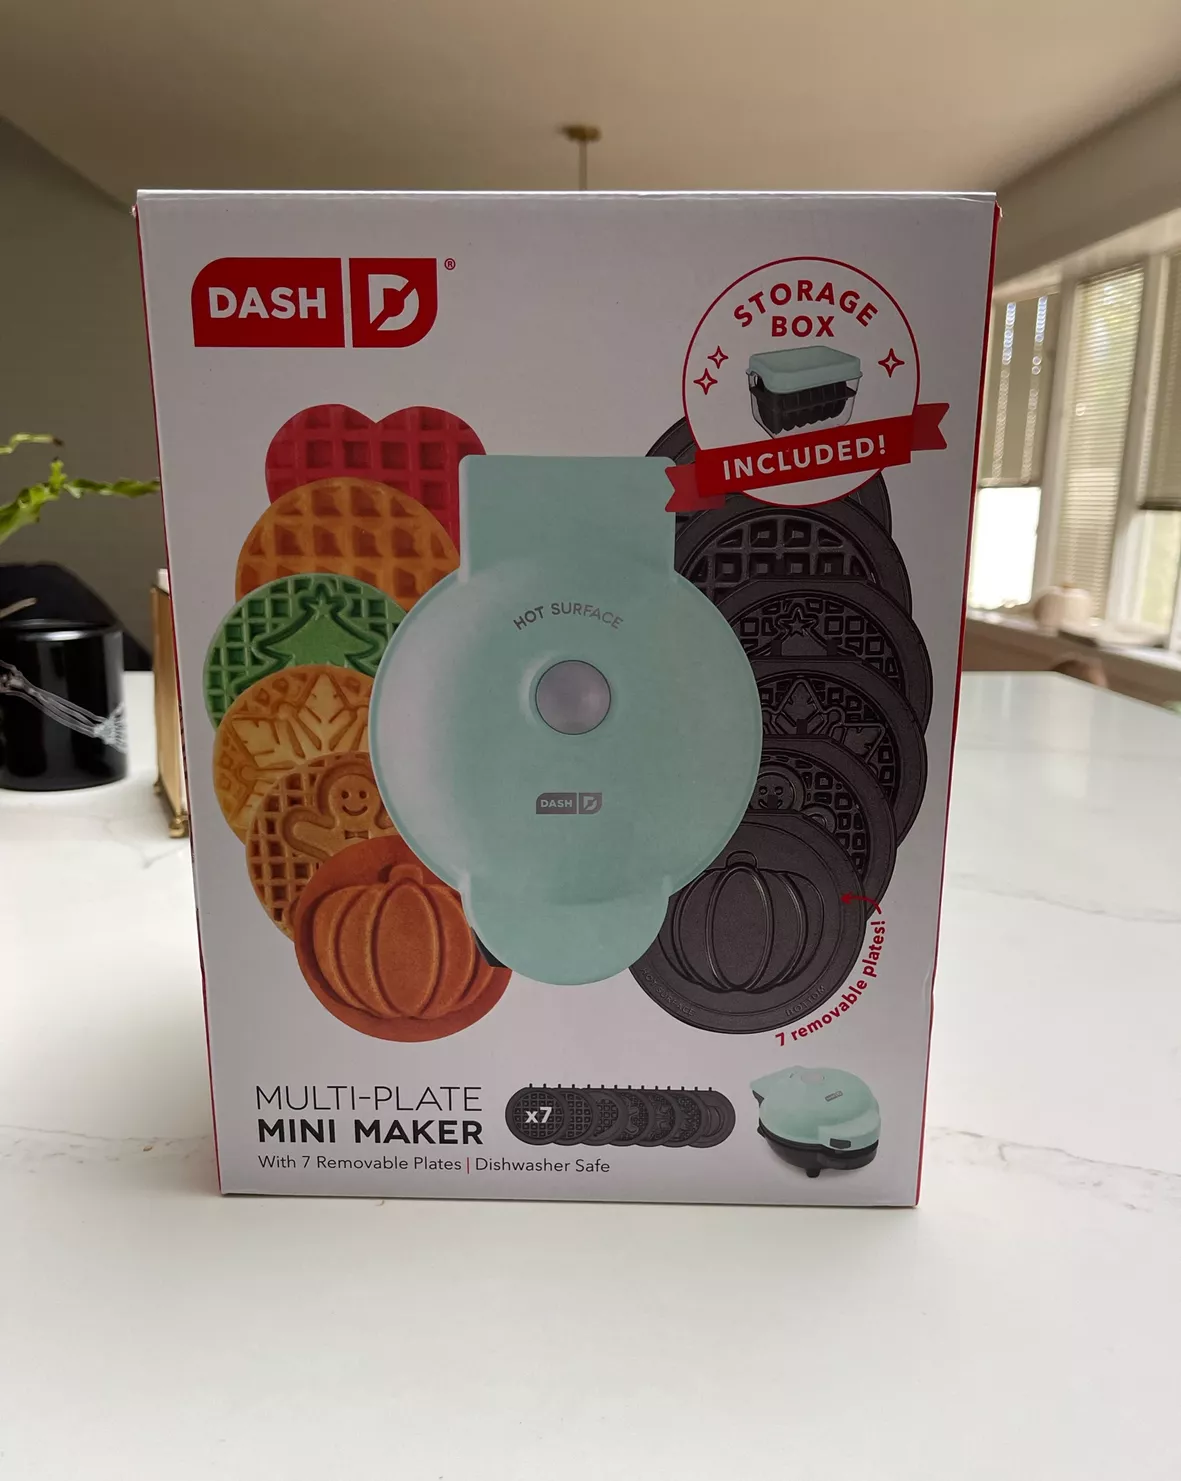 Dash Heart Mini Waffle Maker curated on LTK